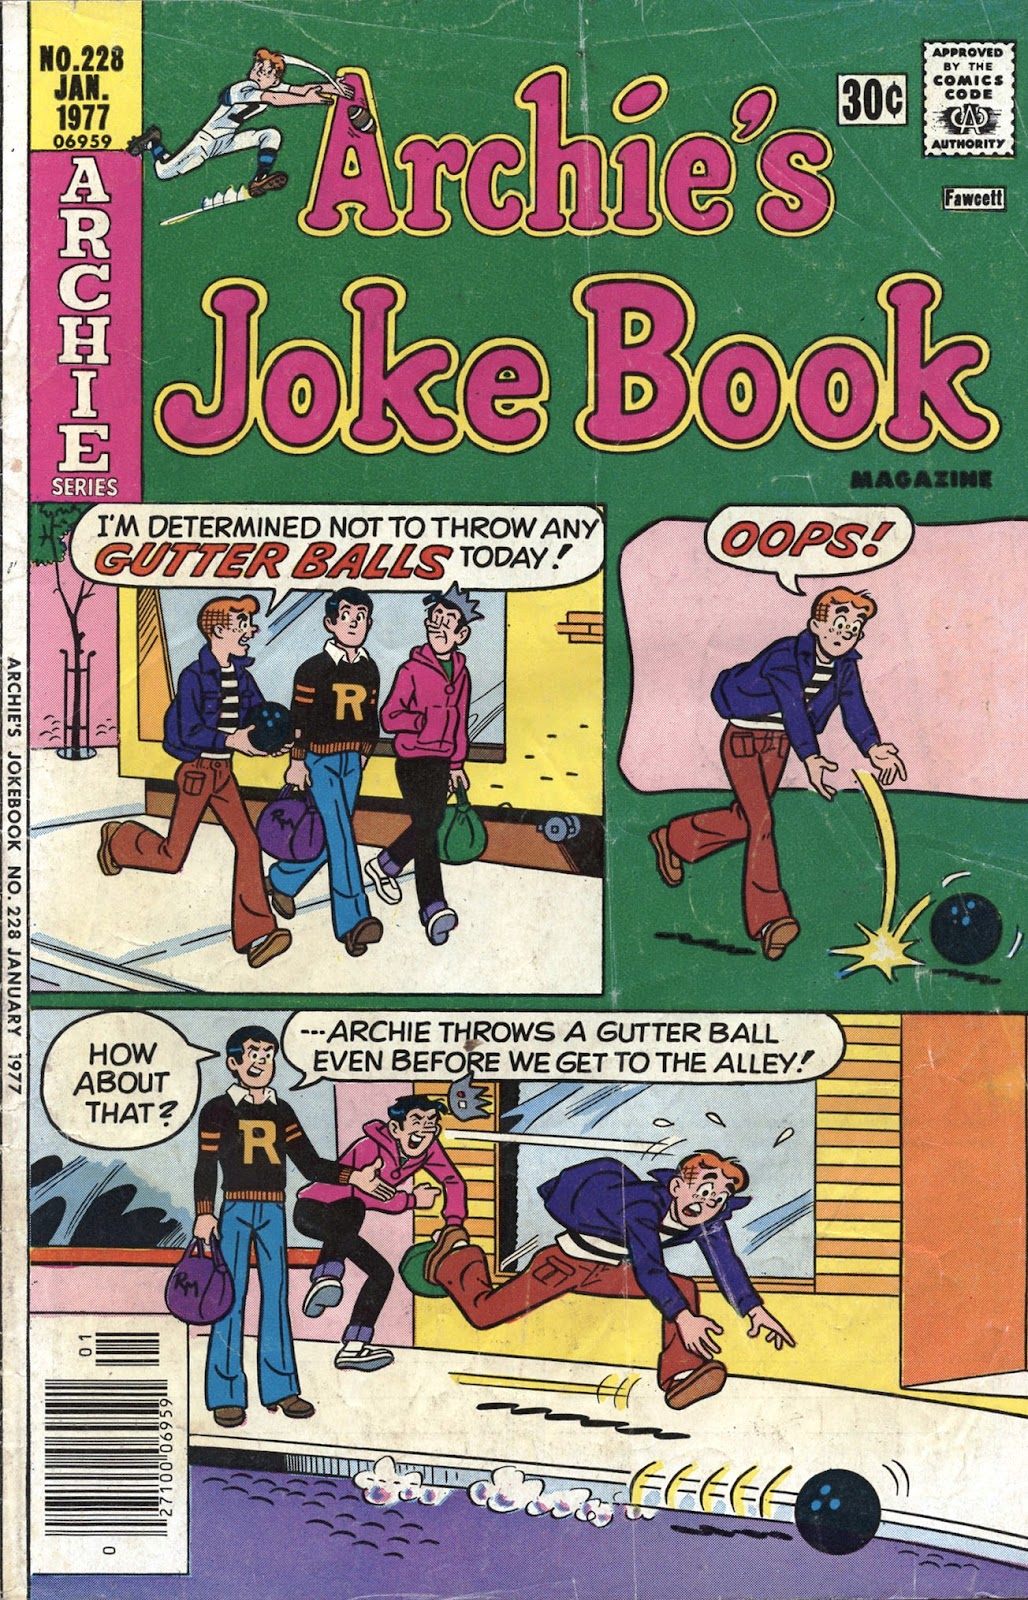 Archie's Joke Book Magazine issue 228 - Page 1